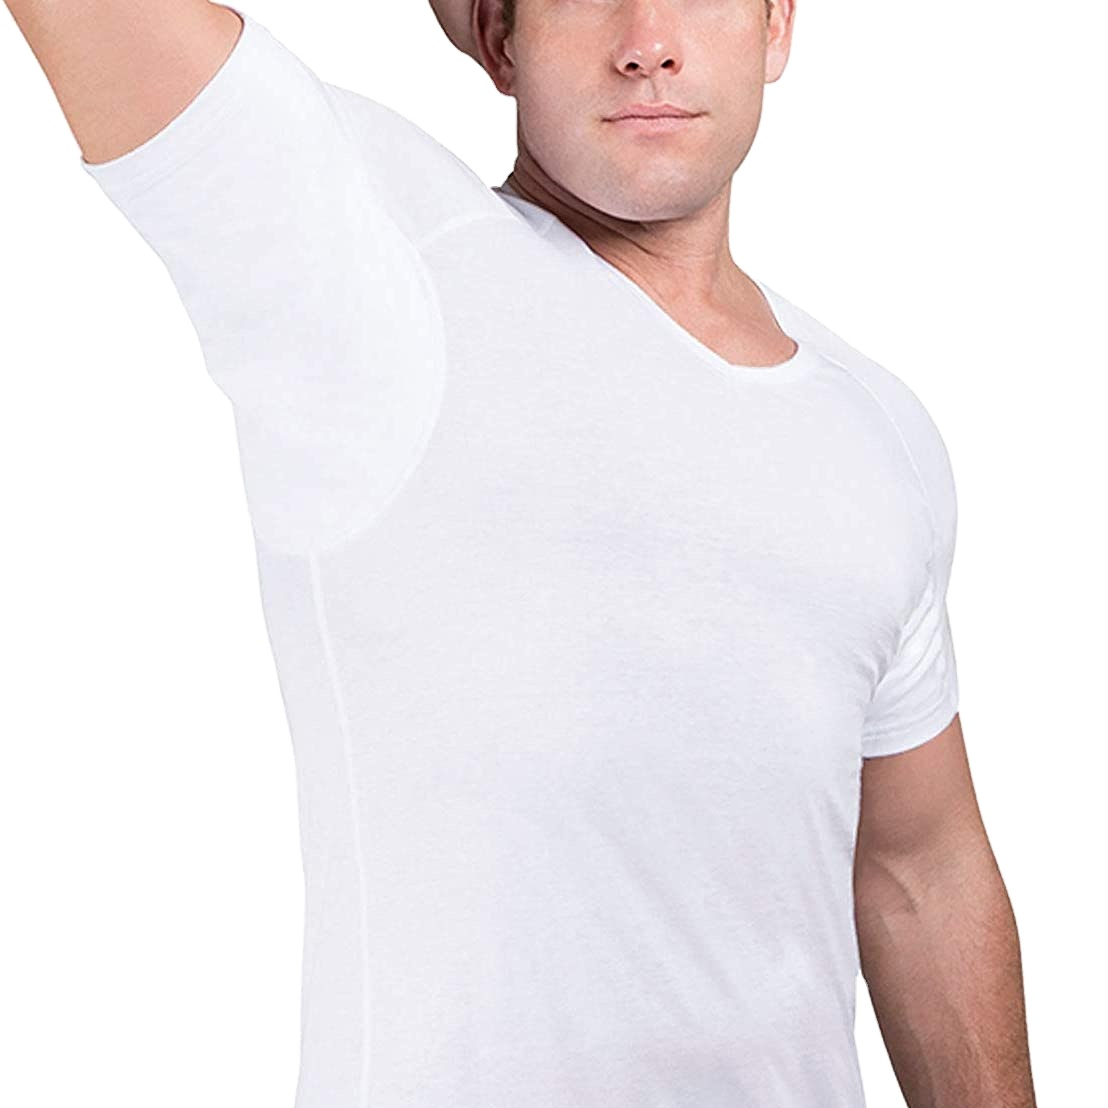 Enerup Custom Brand 100% COTTON Sweatproof T-Shirt Mens Sweat Proof Undershirt With Underram Pads Slim V-Neck T Shirt